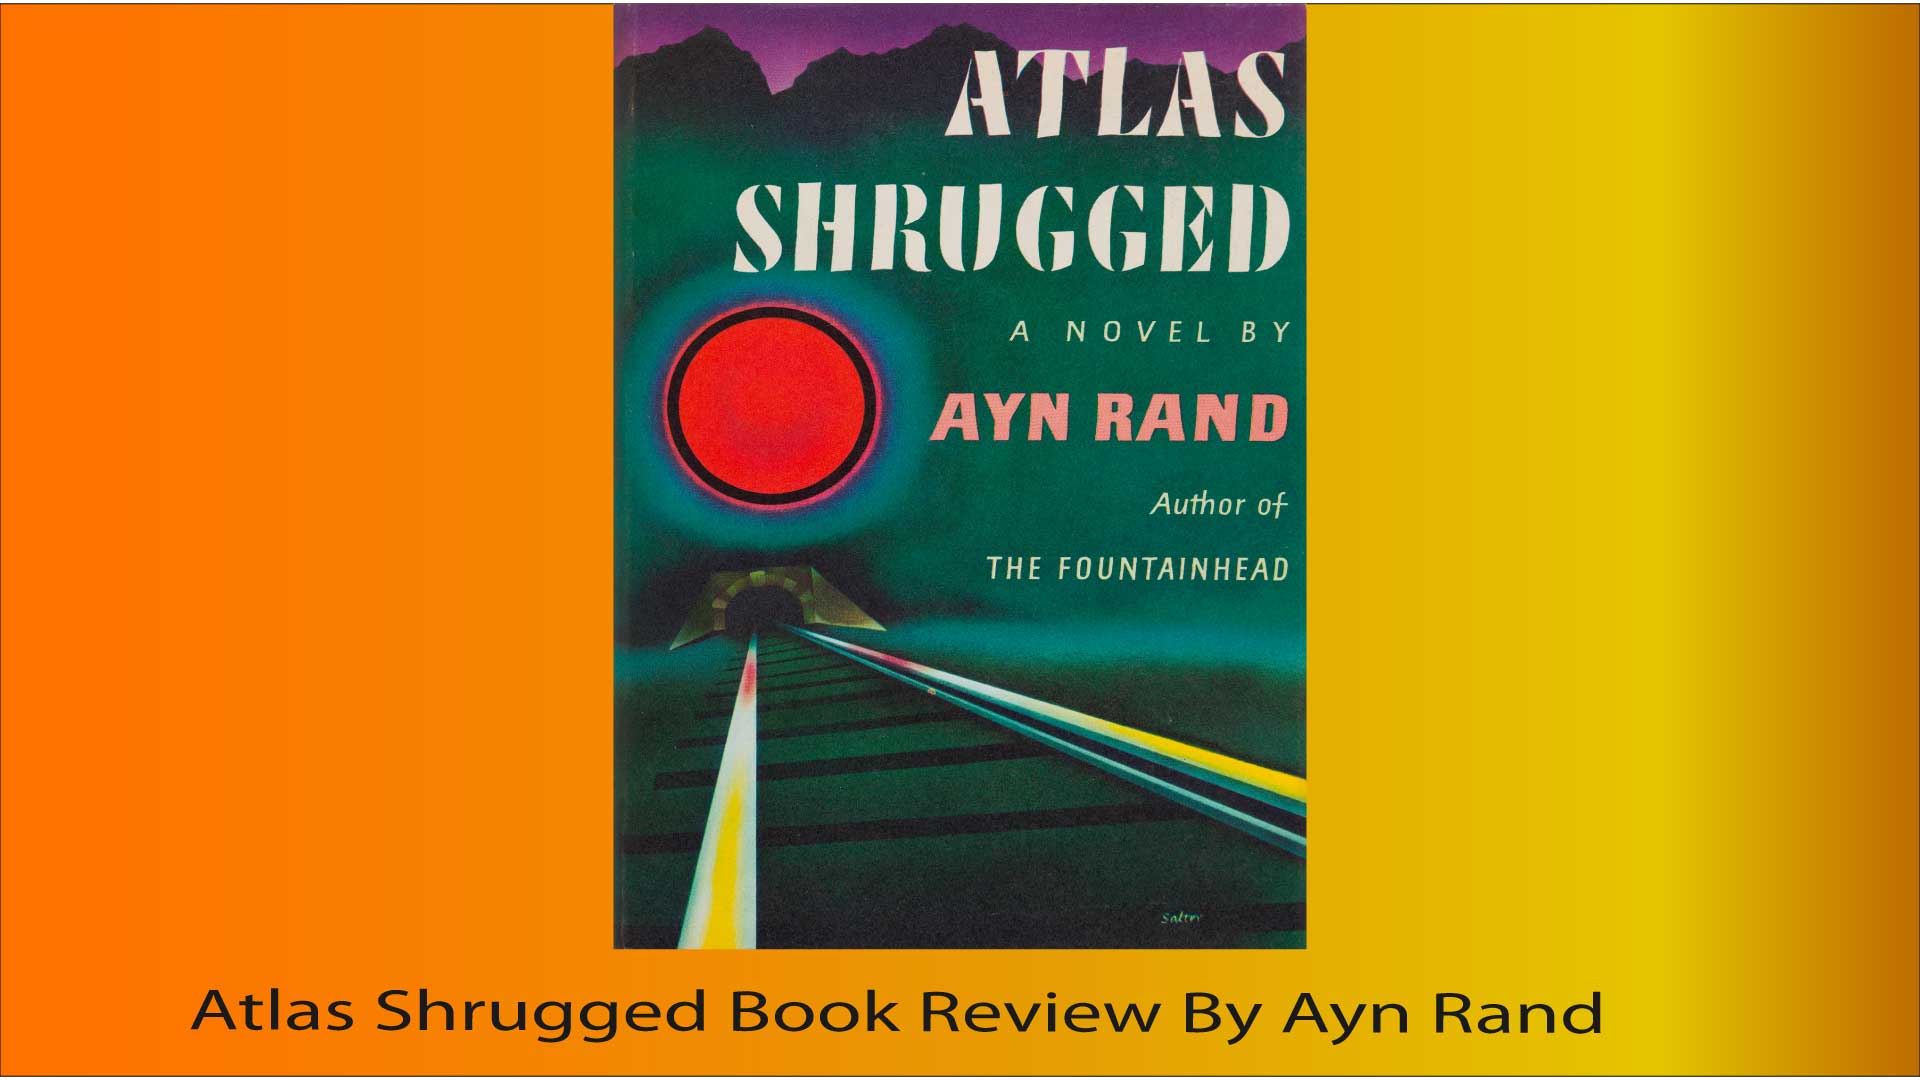 Atlas Shrugged Book Review Cover Image